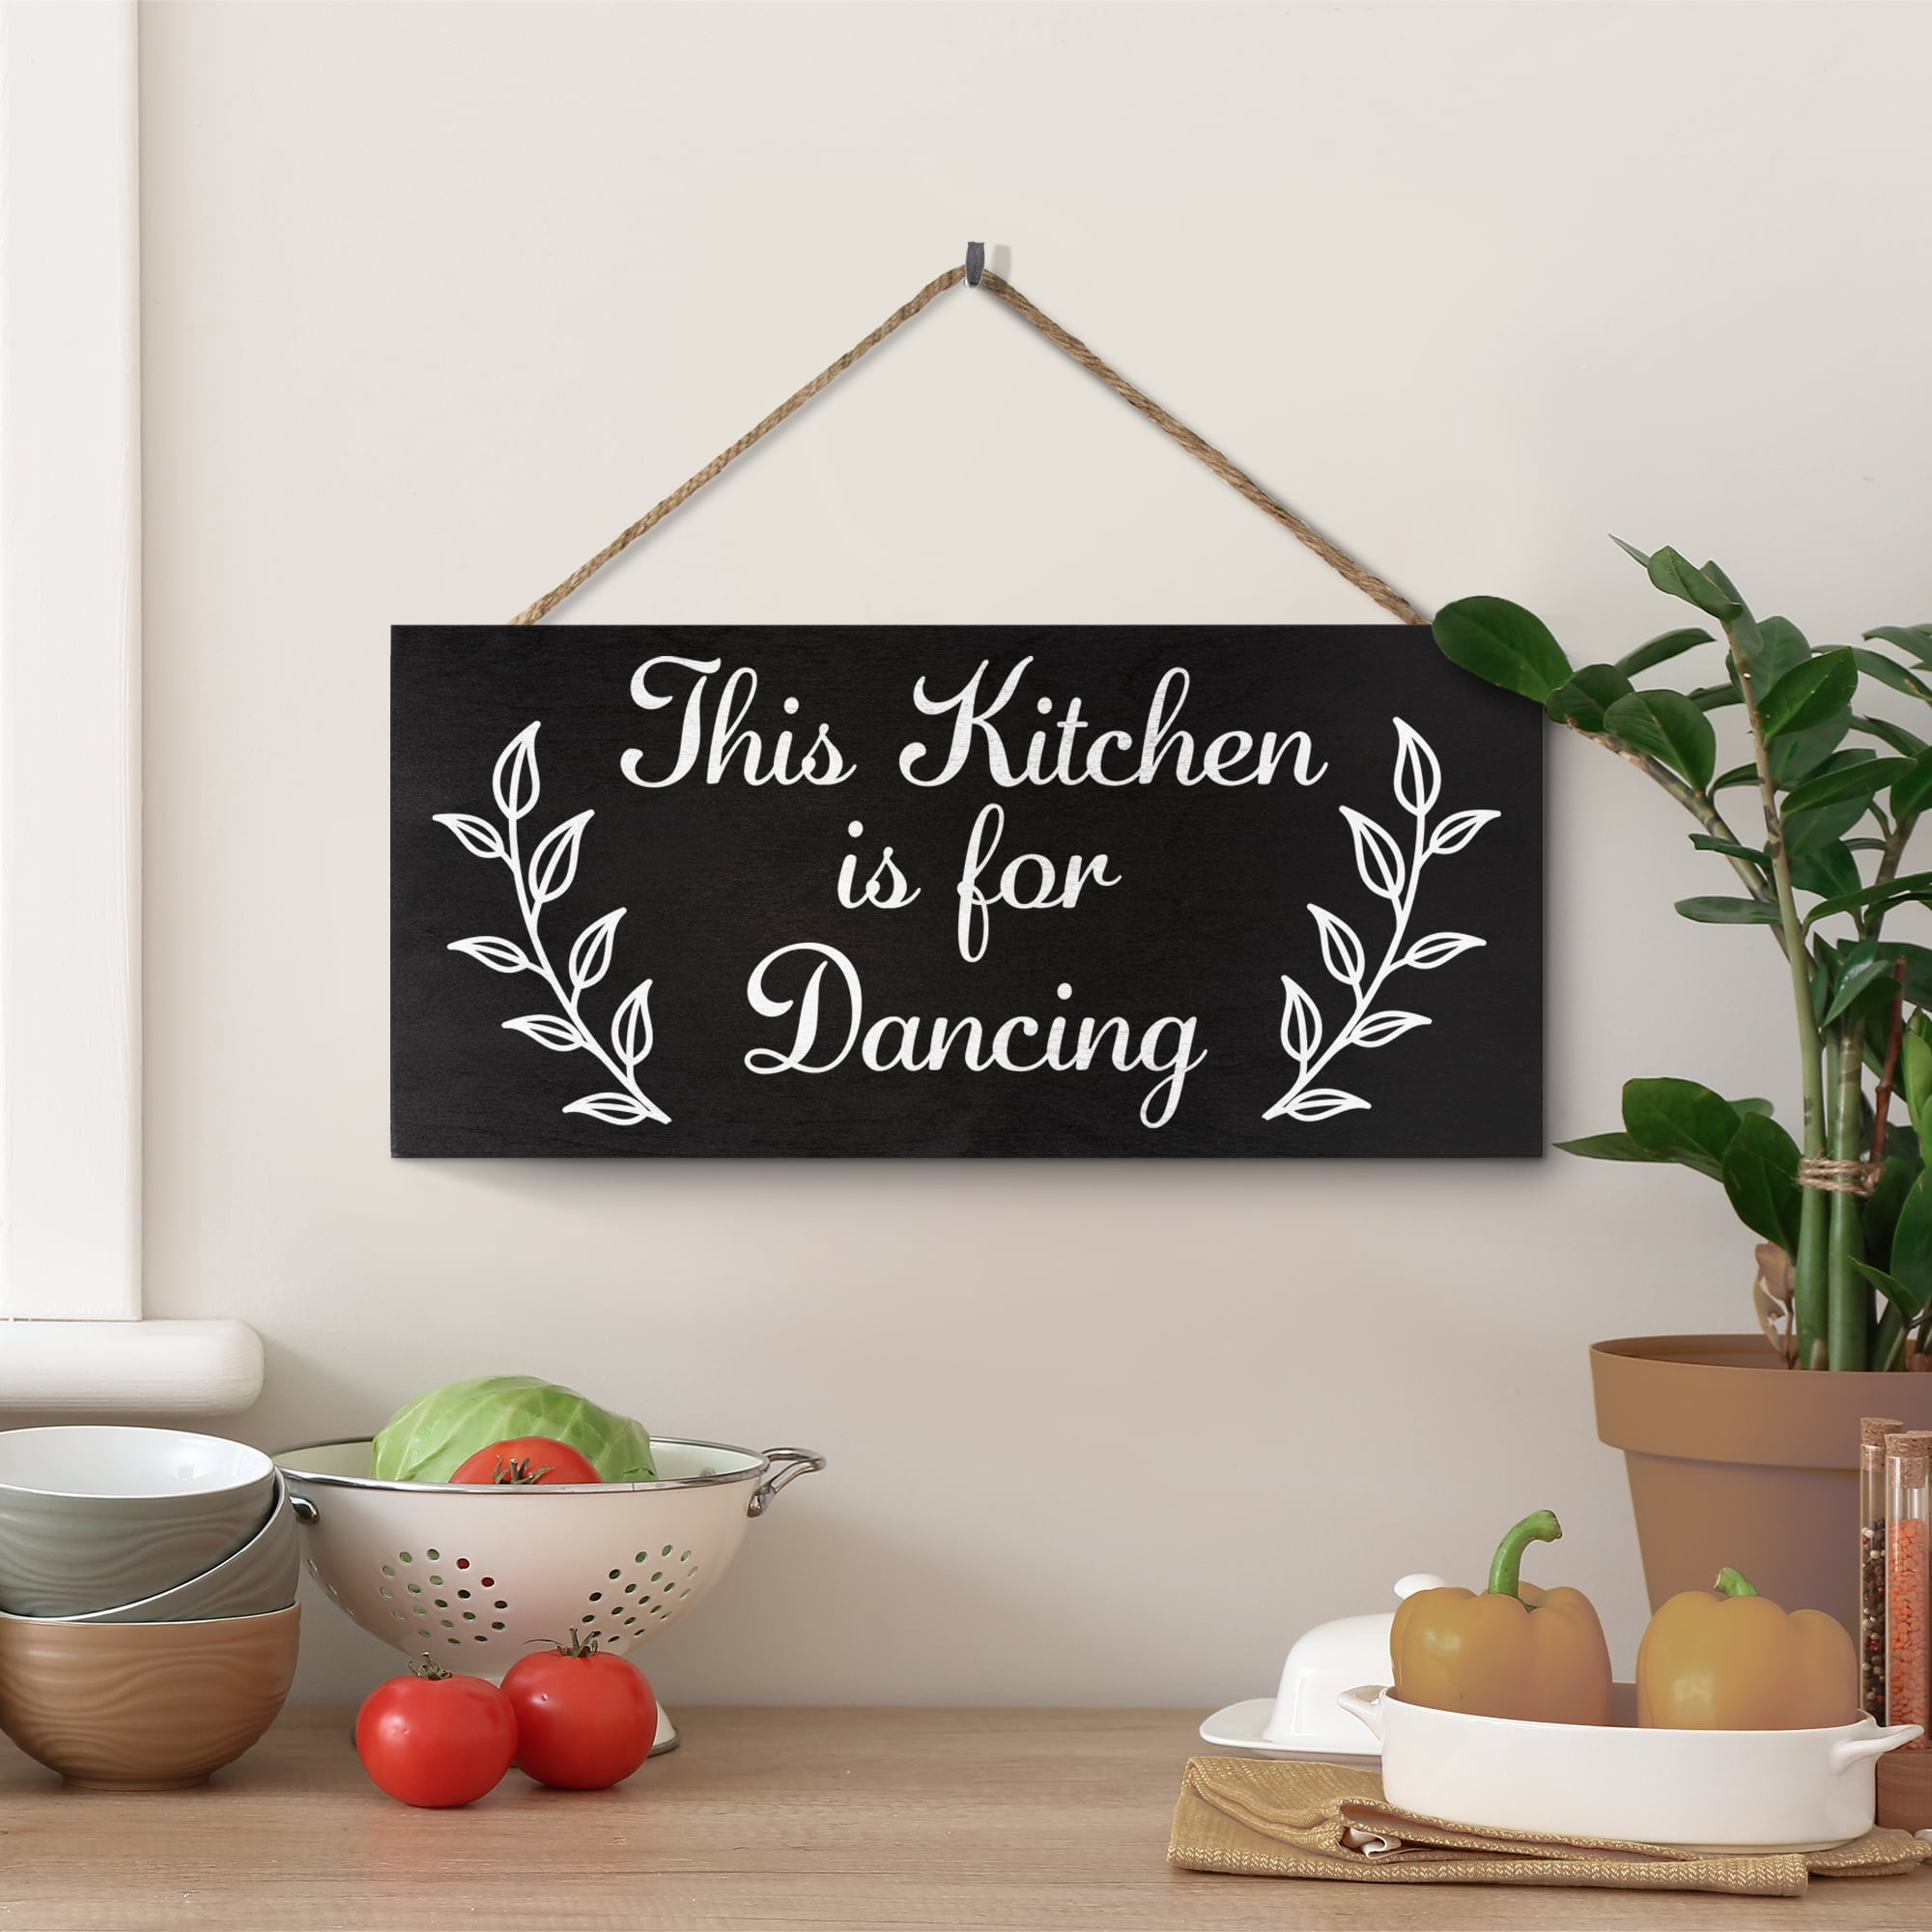 No Bitchin in my Kitchen Kitchen Decor Sign - 8 x 8 inches - Funny Kitchen  Decor - Hilarious Kitchen Wall Art - Farmhouse Kitchen Decor - Kitchen Wall  Decor - Funny Home Decor - True Stock Studios 